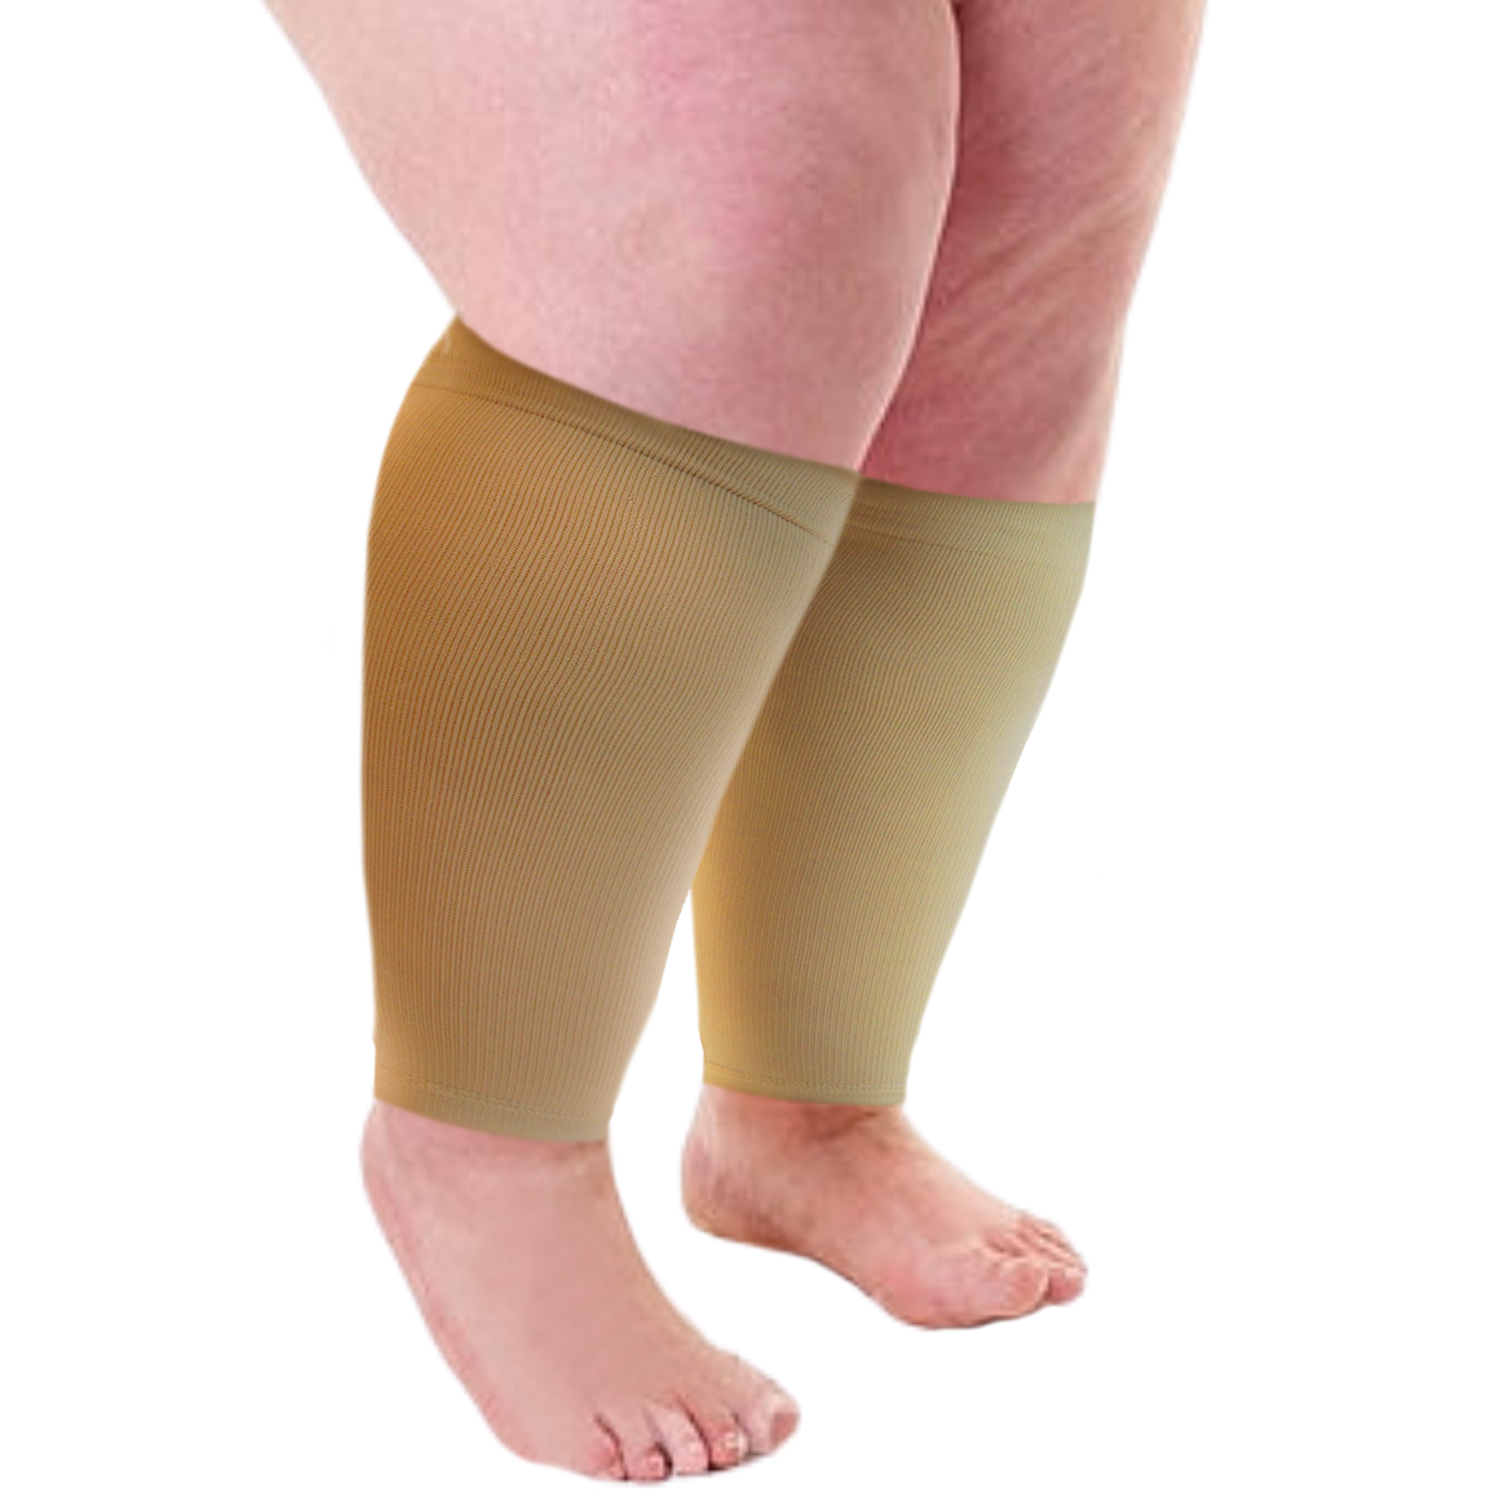 Runee Extra Wide Calf Compression Sleeve - Leg Support For Wide Calves, Compression  Sleeve For Calf Pain & Shin Splint, Relief Swelling, Varicose Veins, DVT  (Black)